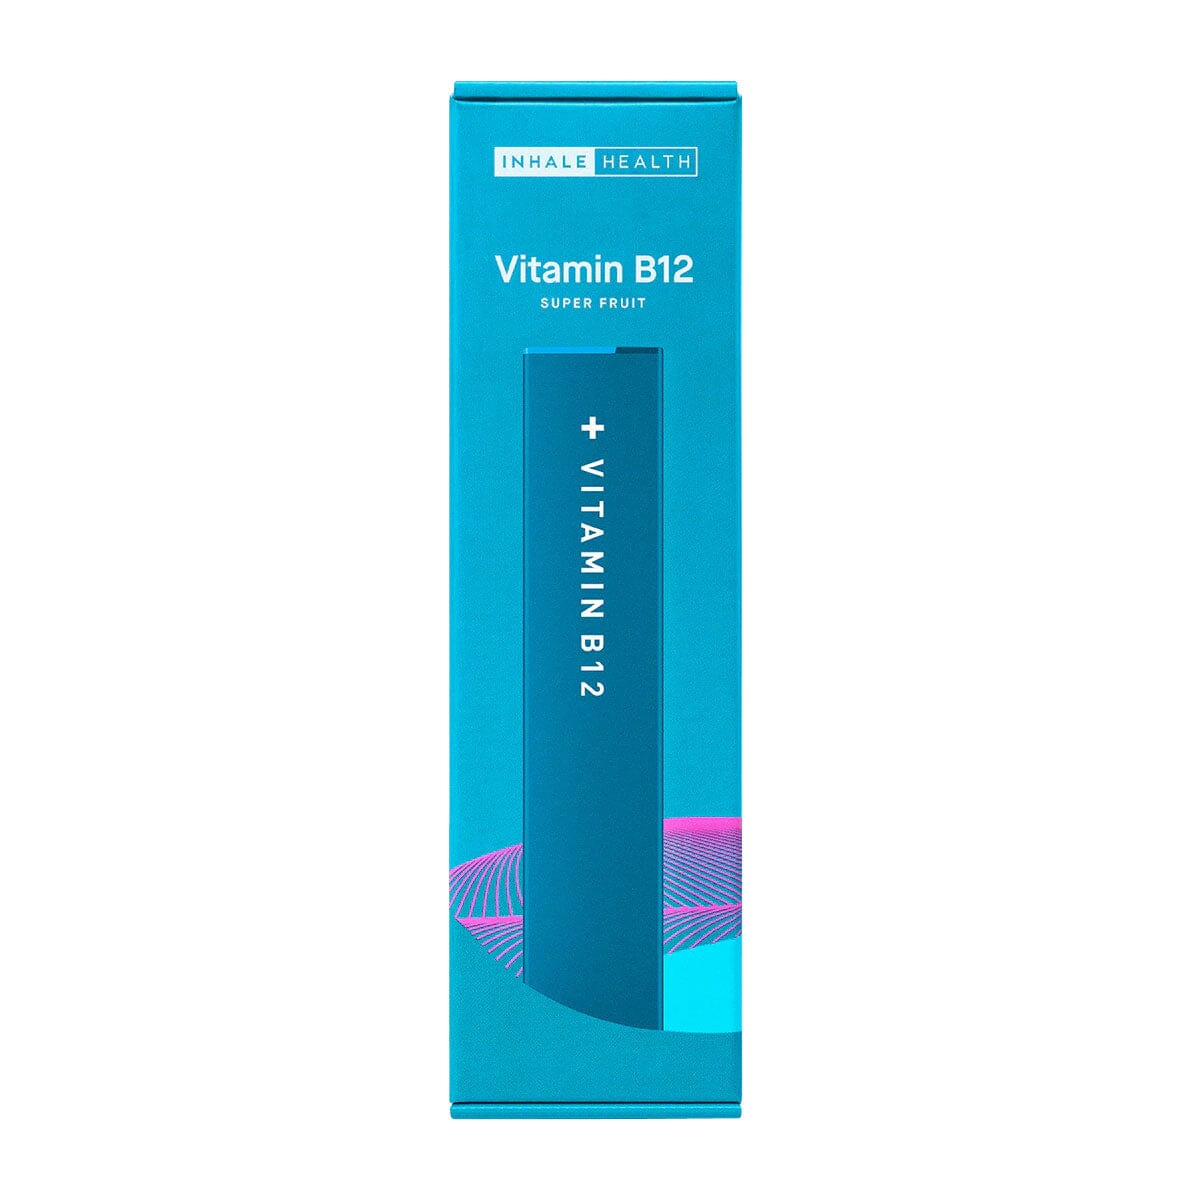 Vitamin B12 Inhaler